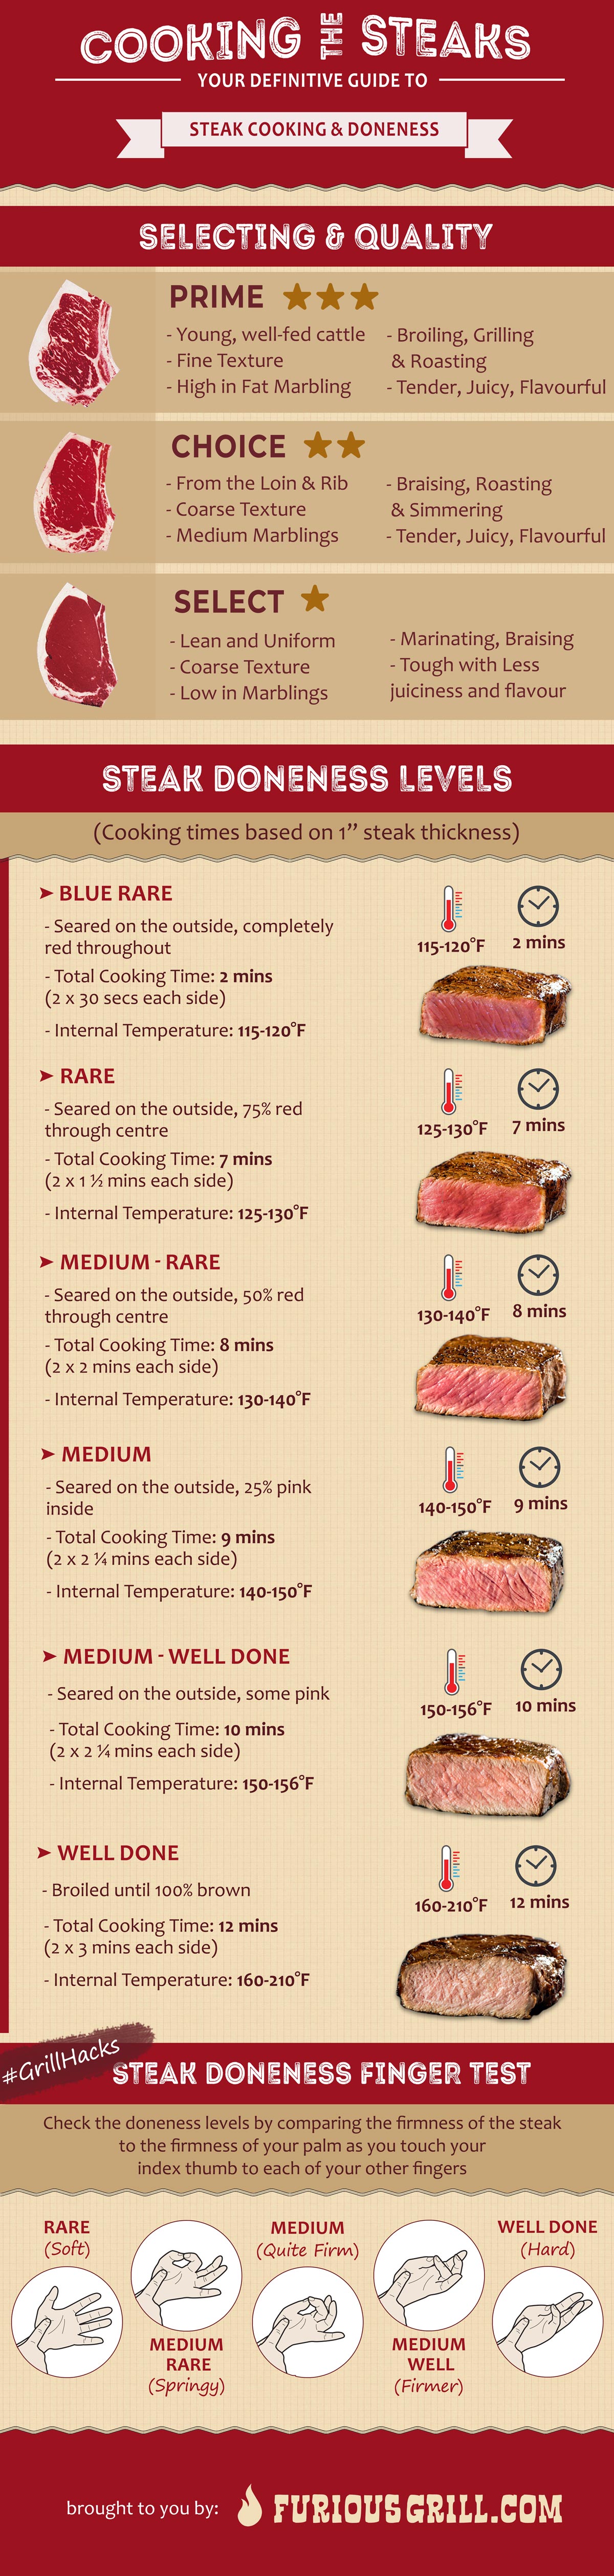 Steak Doneness Chart & Temperatures